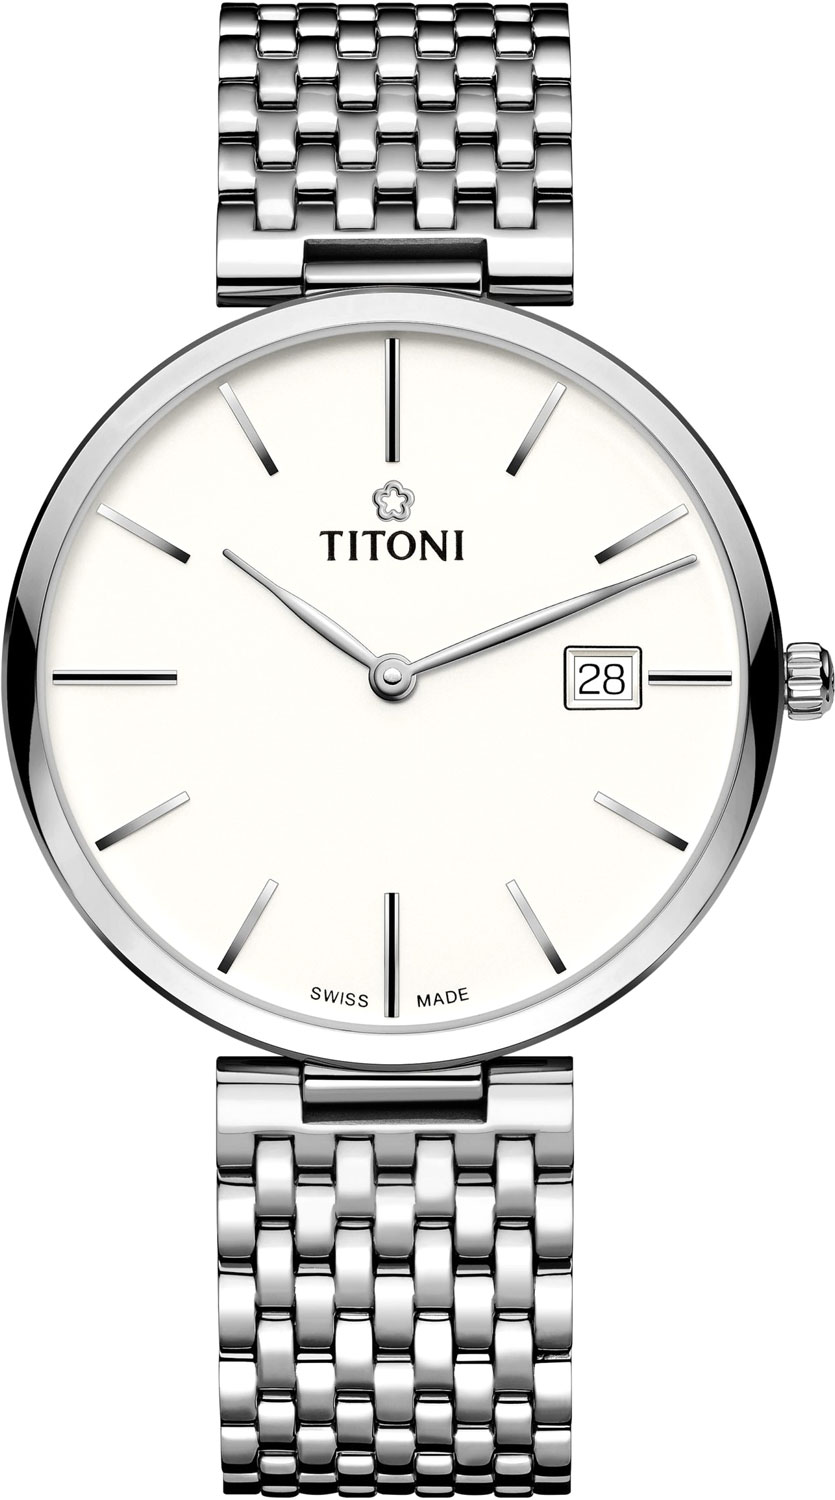     Titoni 82718-S-606